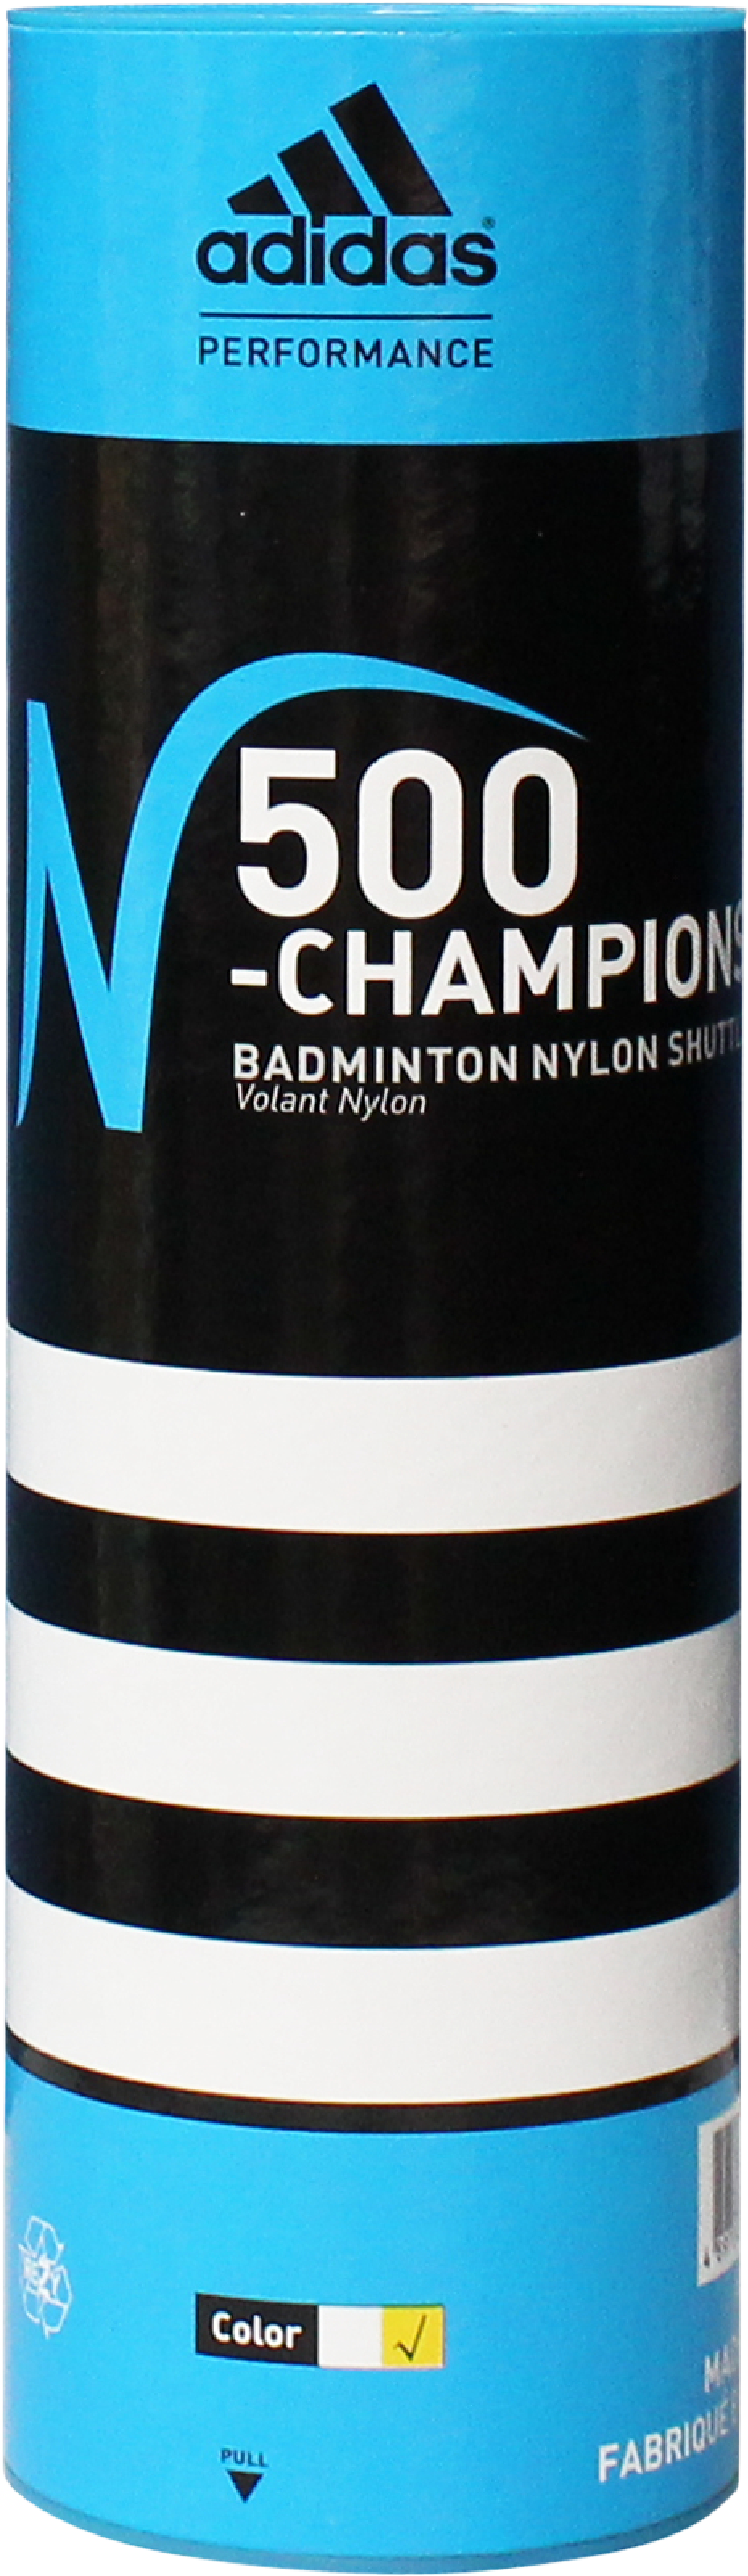 adidas n 500 championship badminton shuttlecock